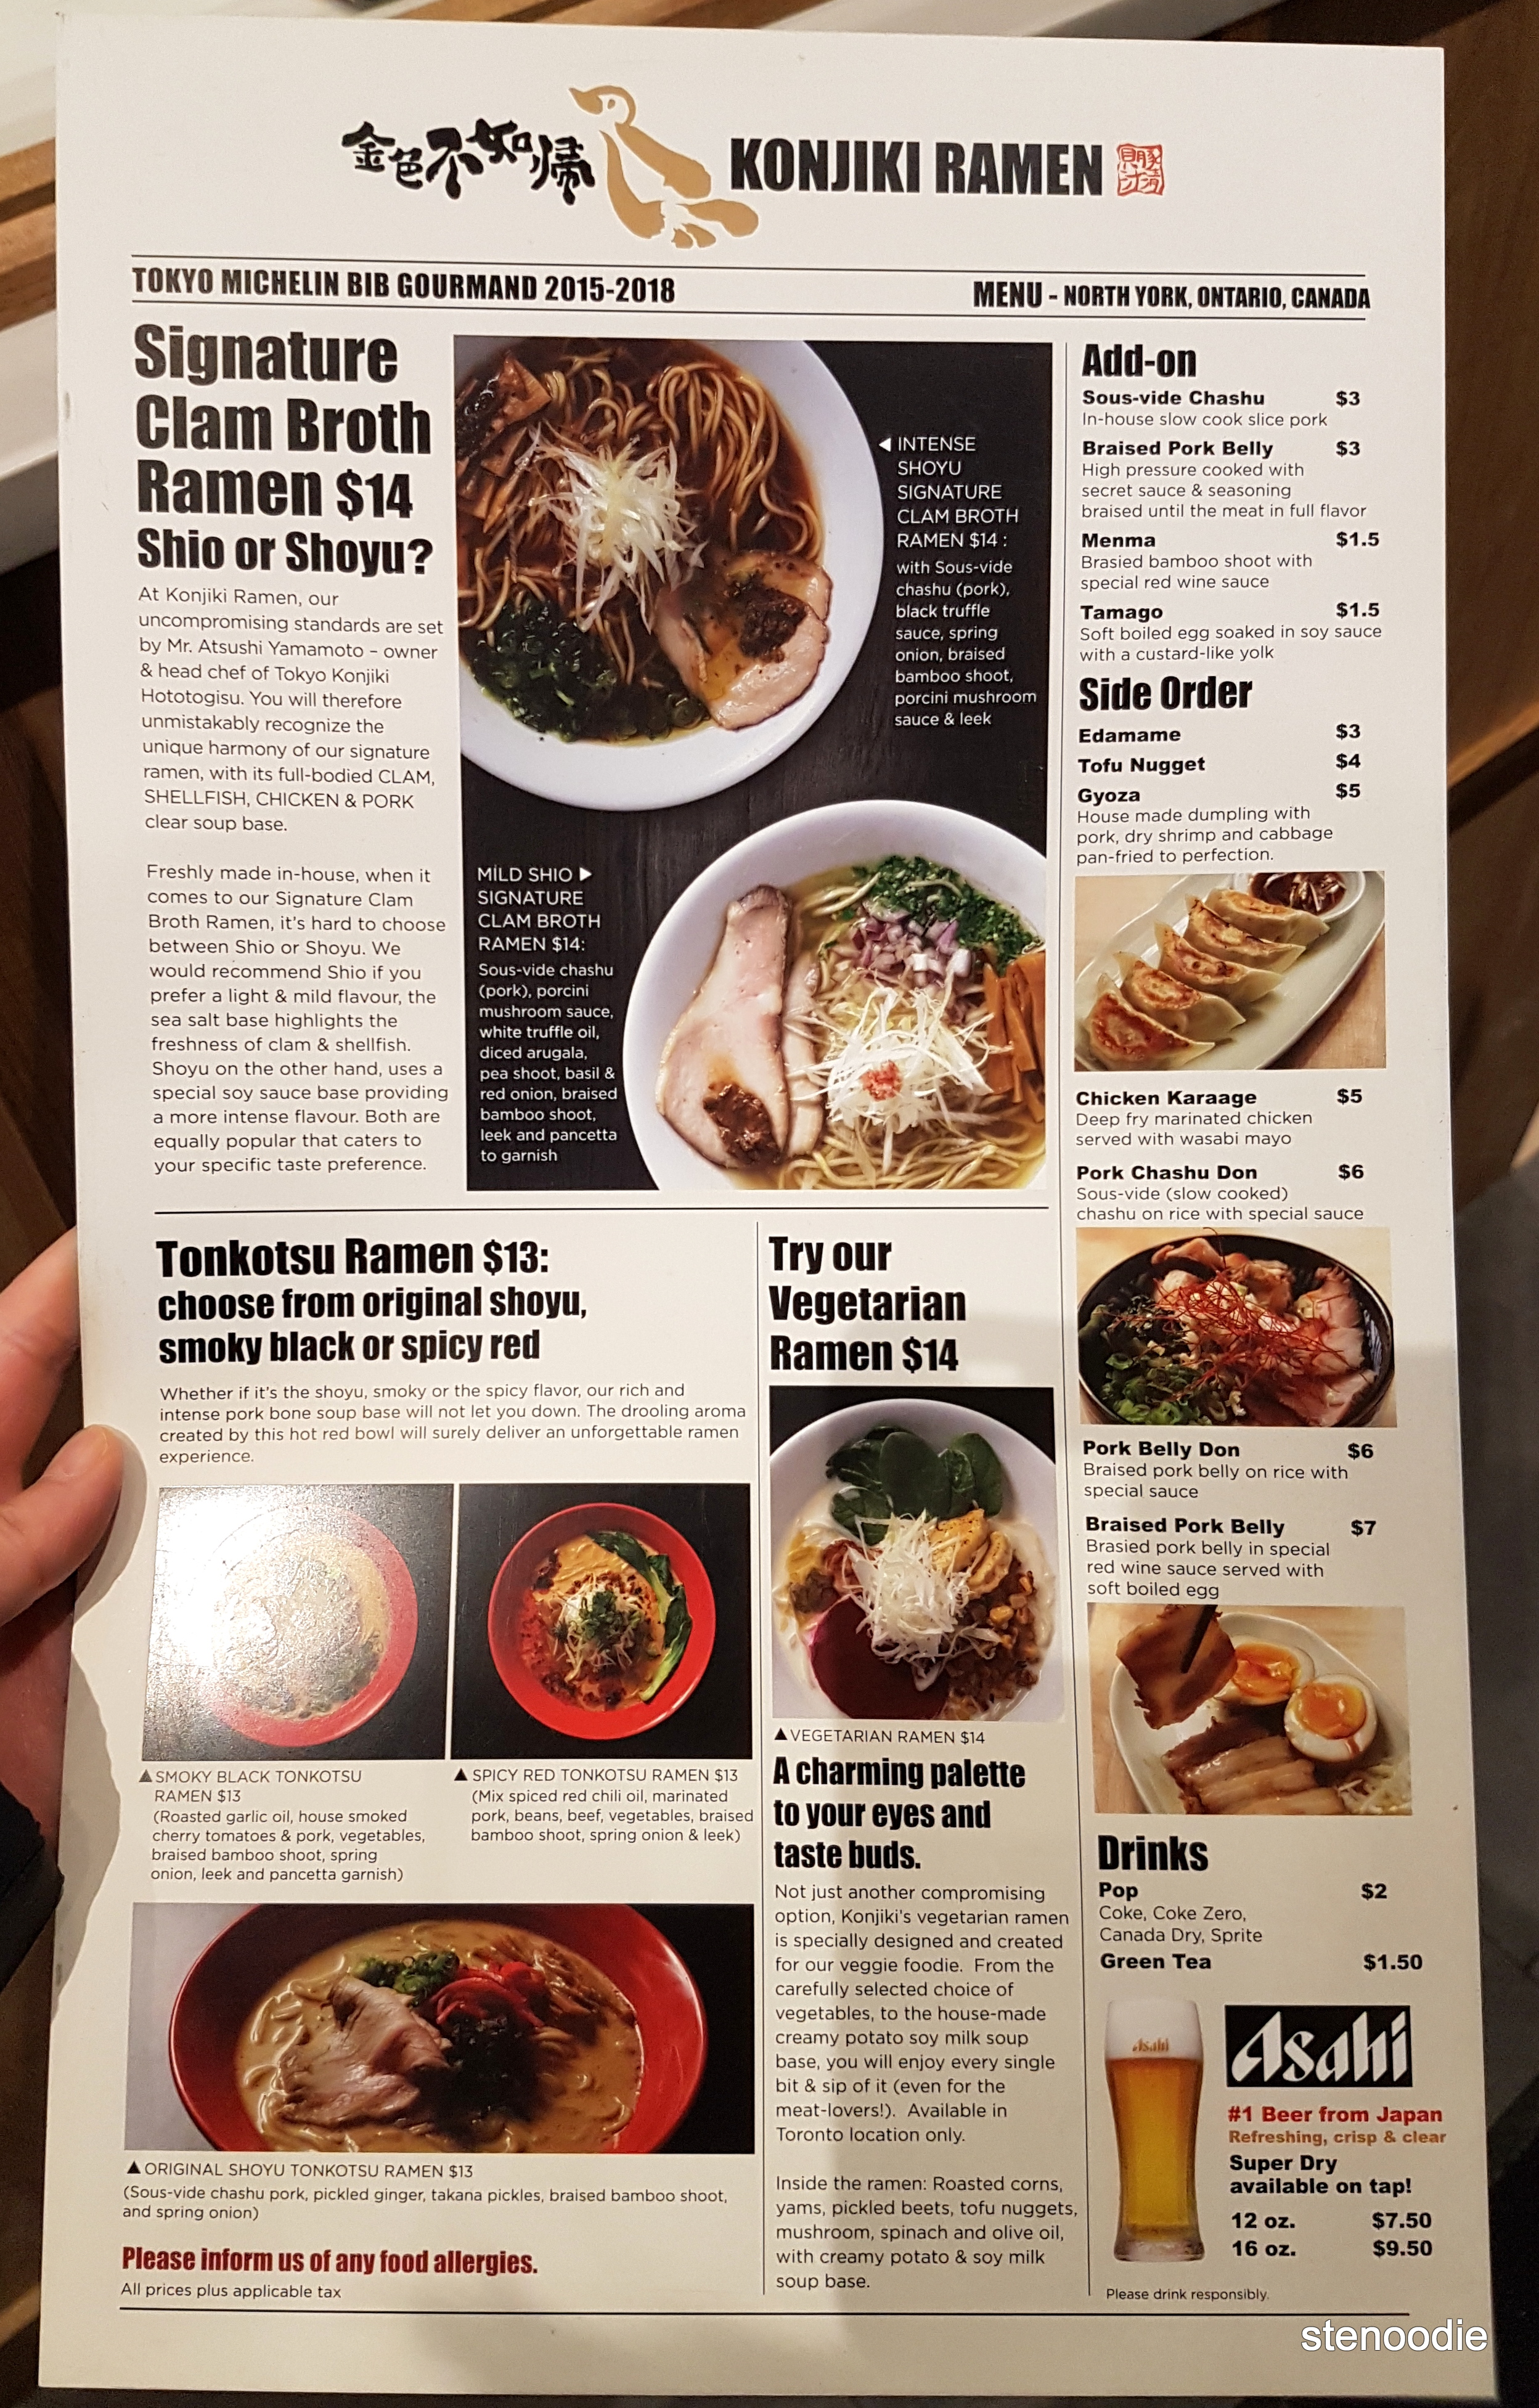  Konjiki Ramen menu and prices